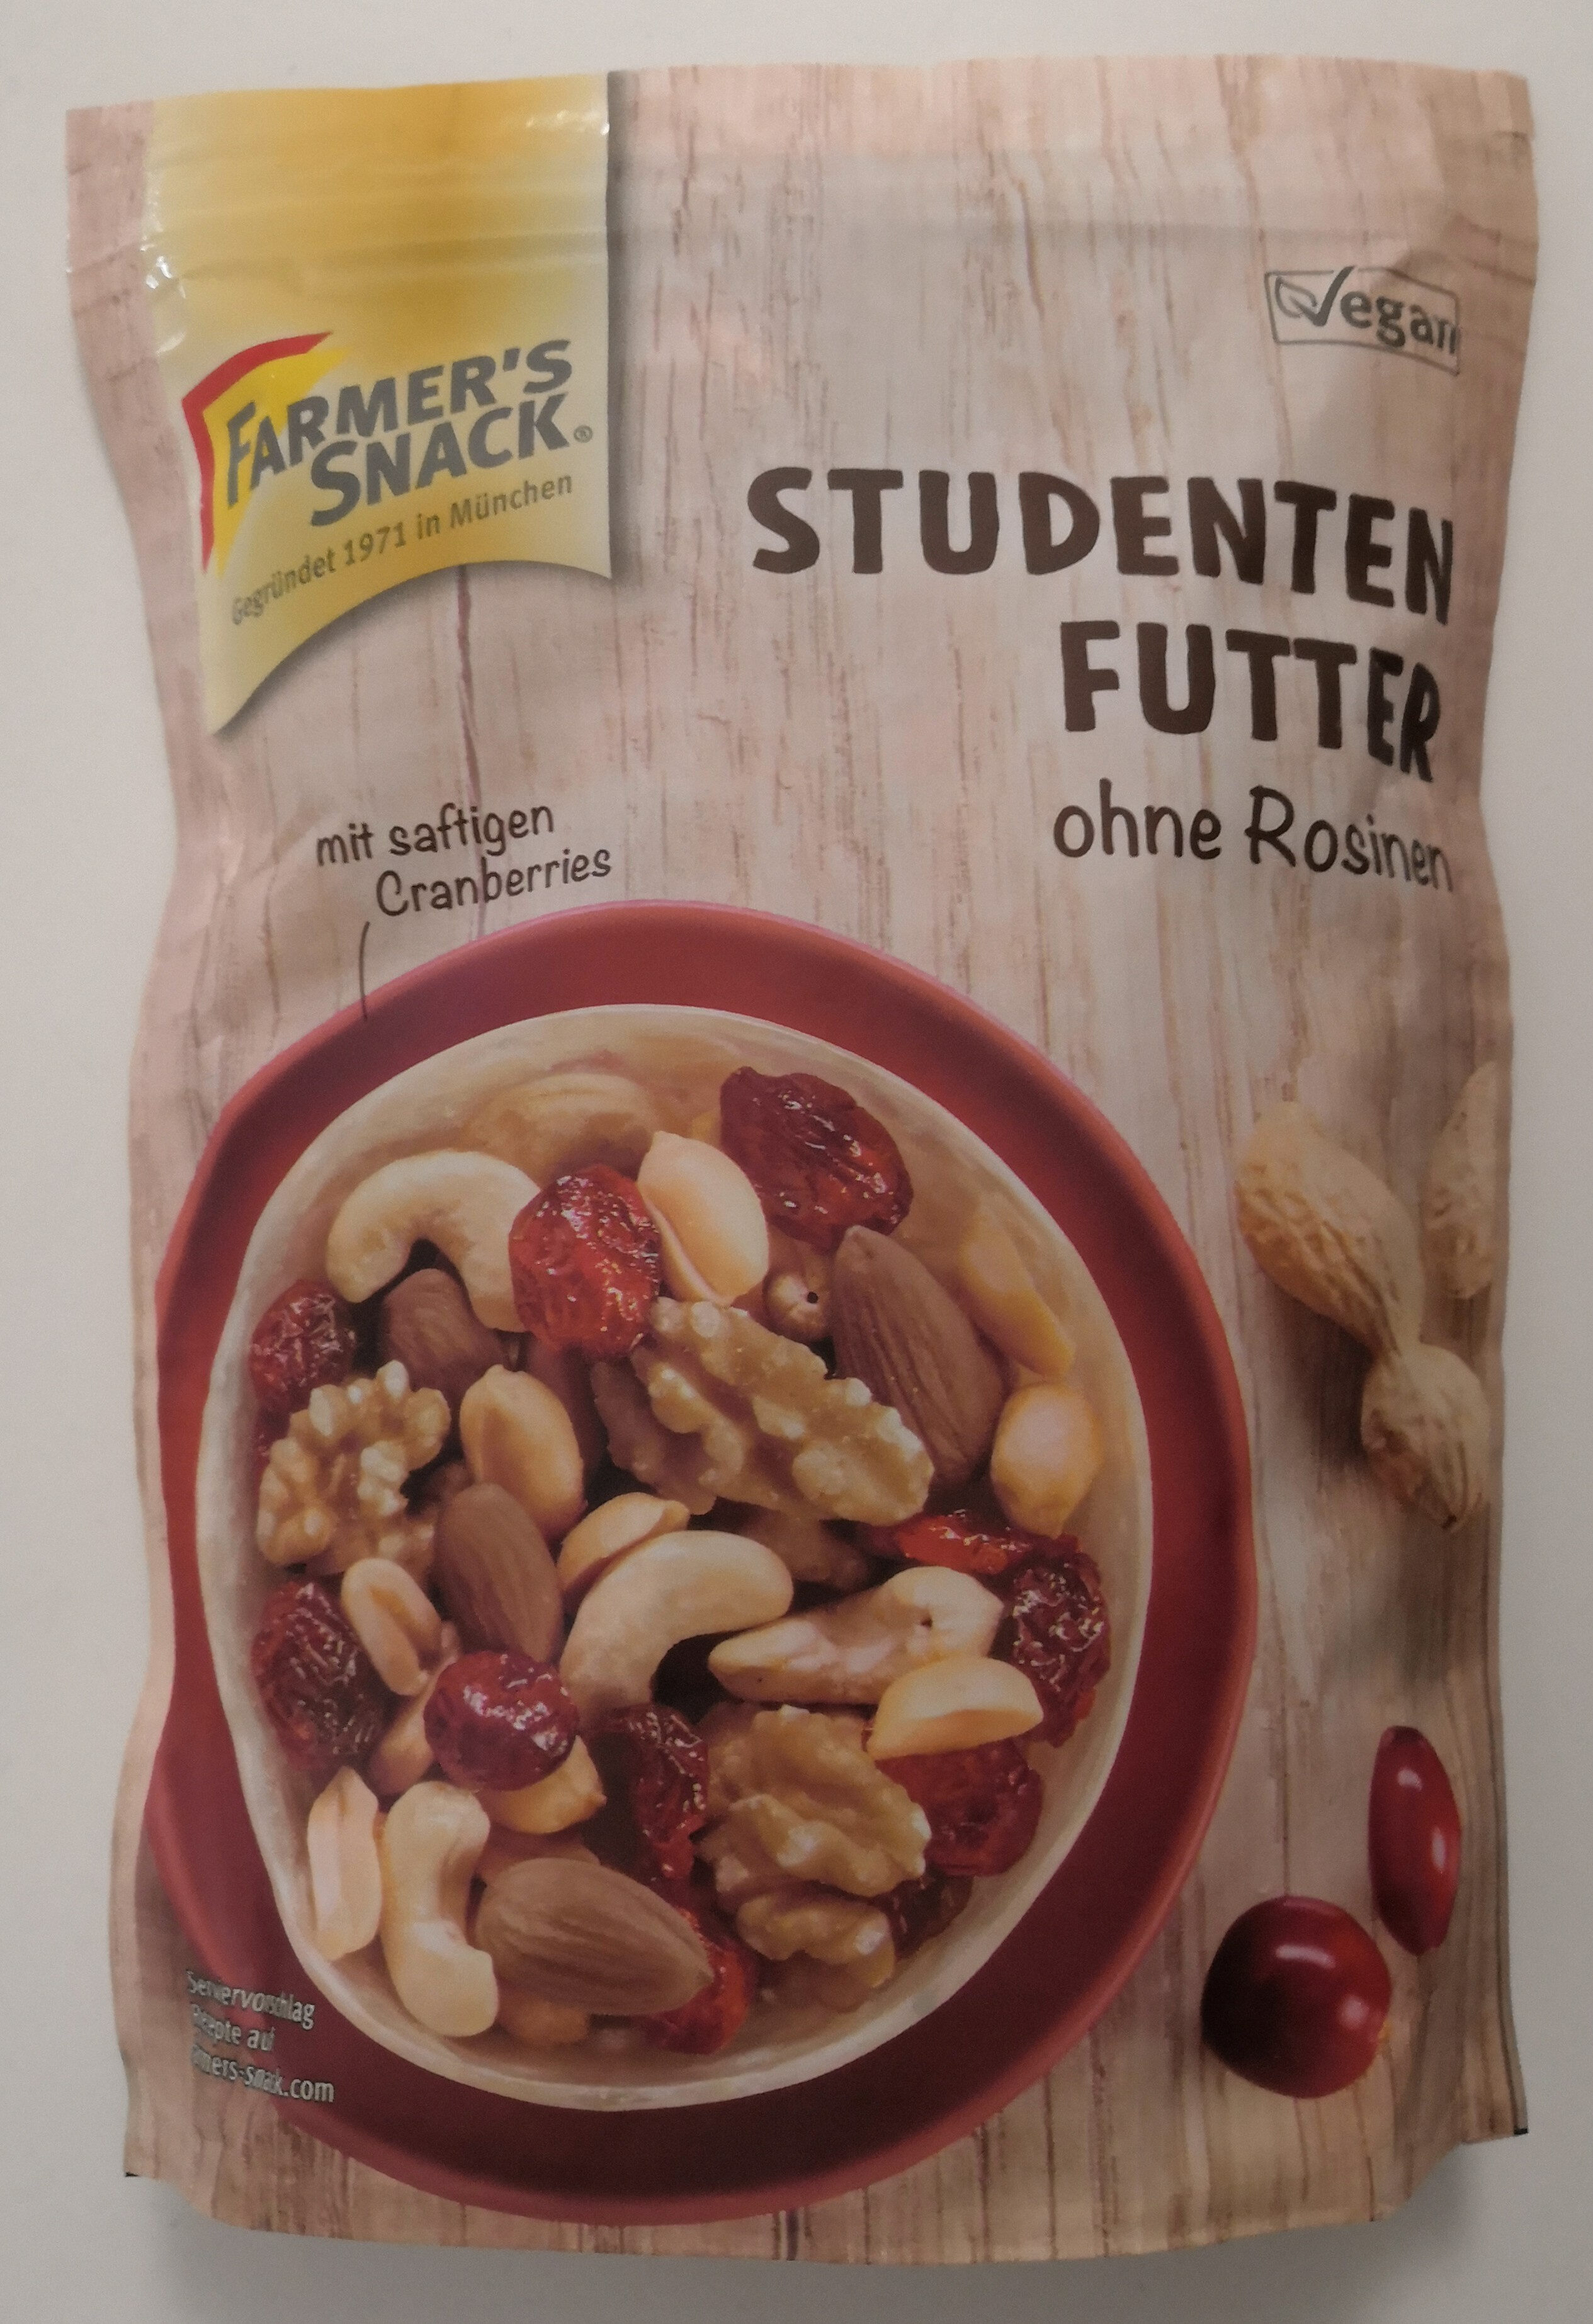 Studentenfutter ohne Rosinen mit saftigen Cranberries - Product - de